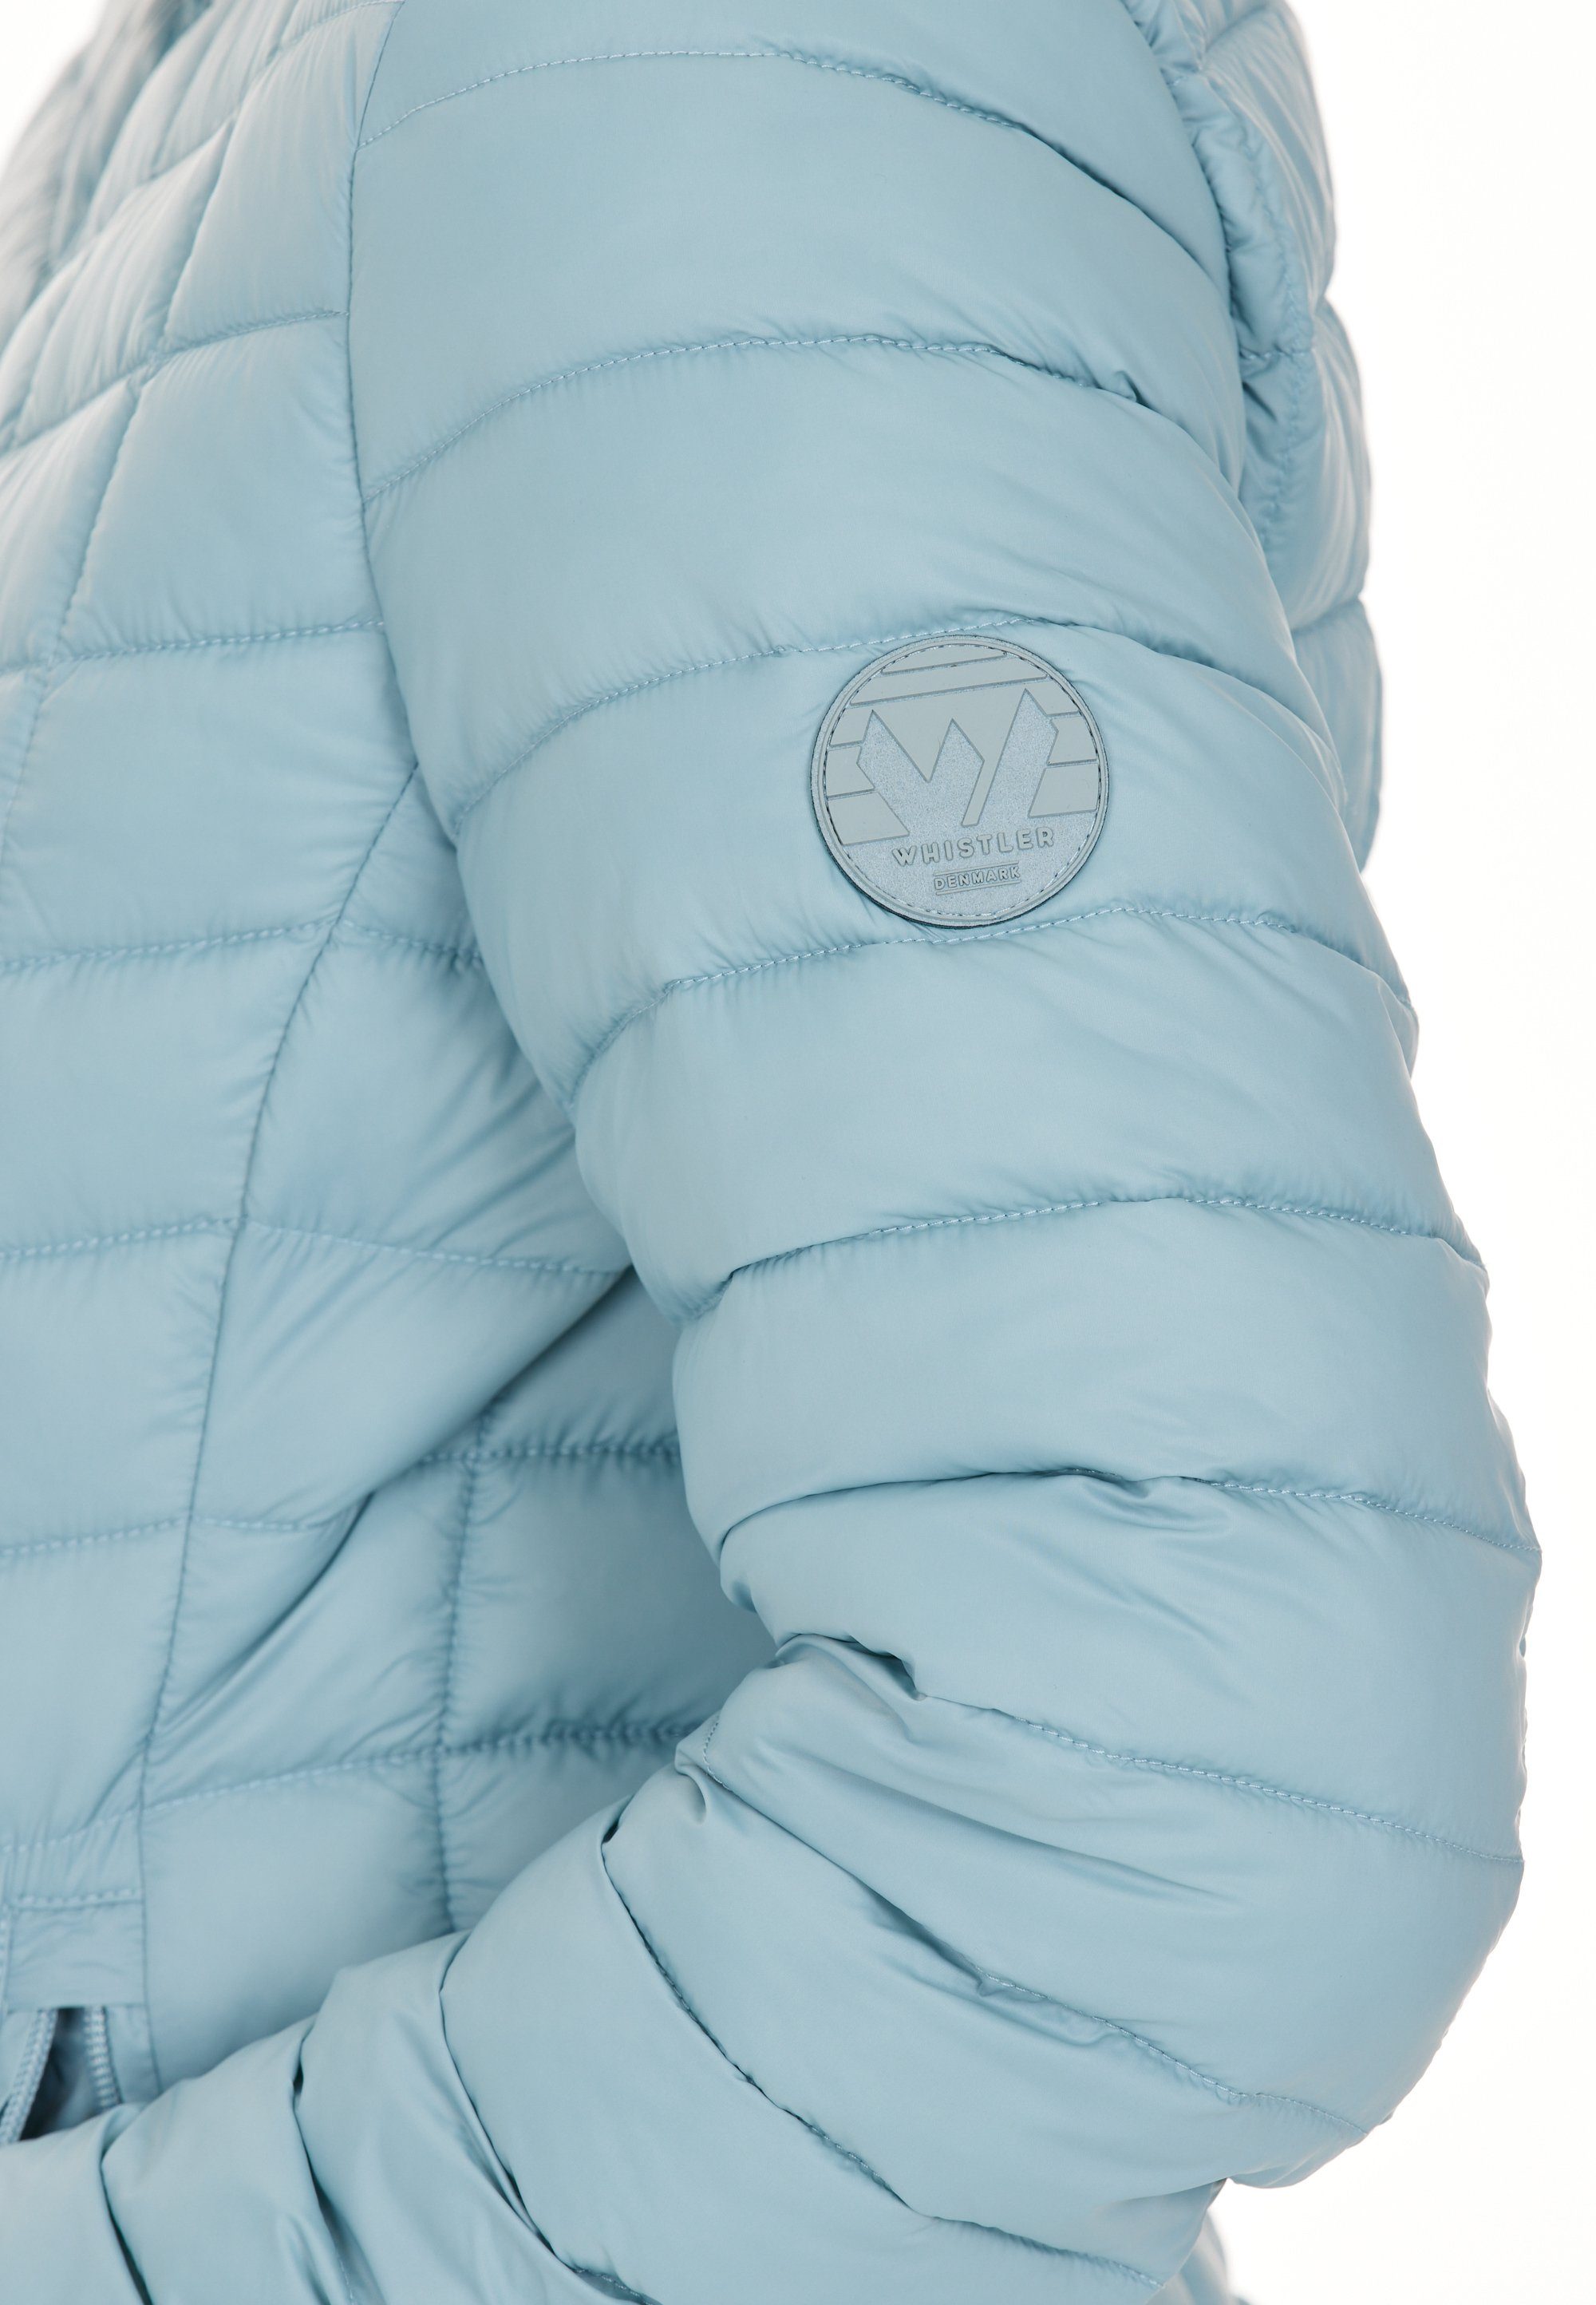 Outdoorjacke frostblau WHISTLER in Kate tollem Stepp-Design